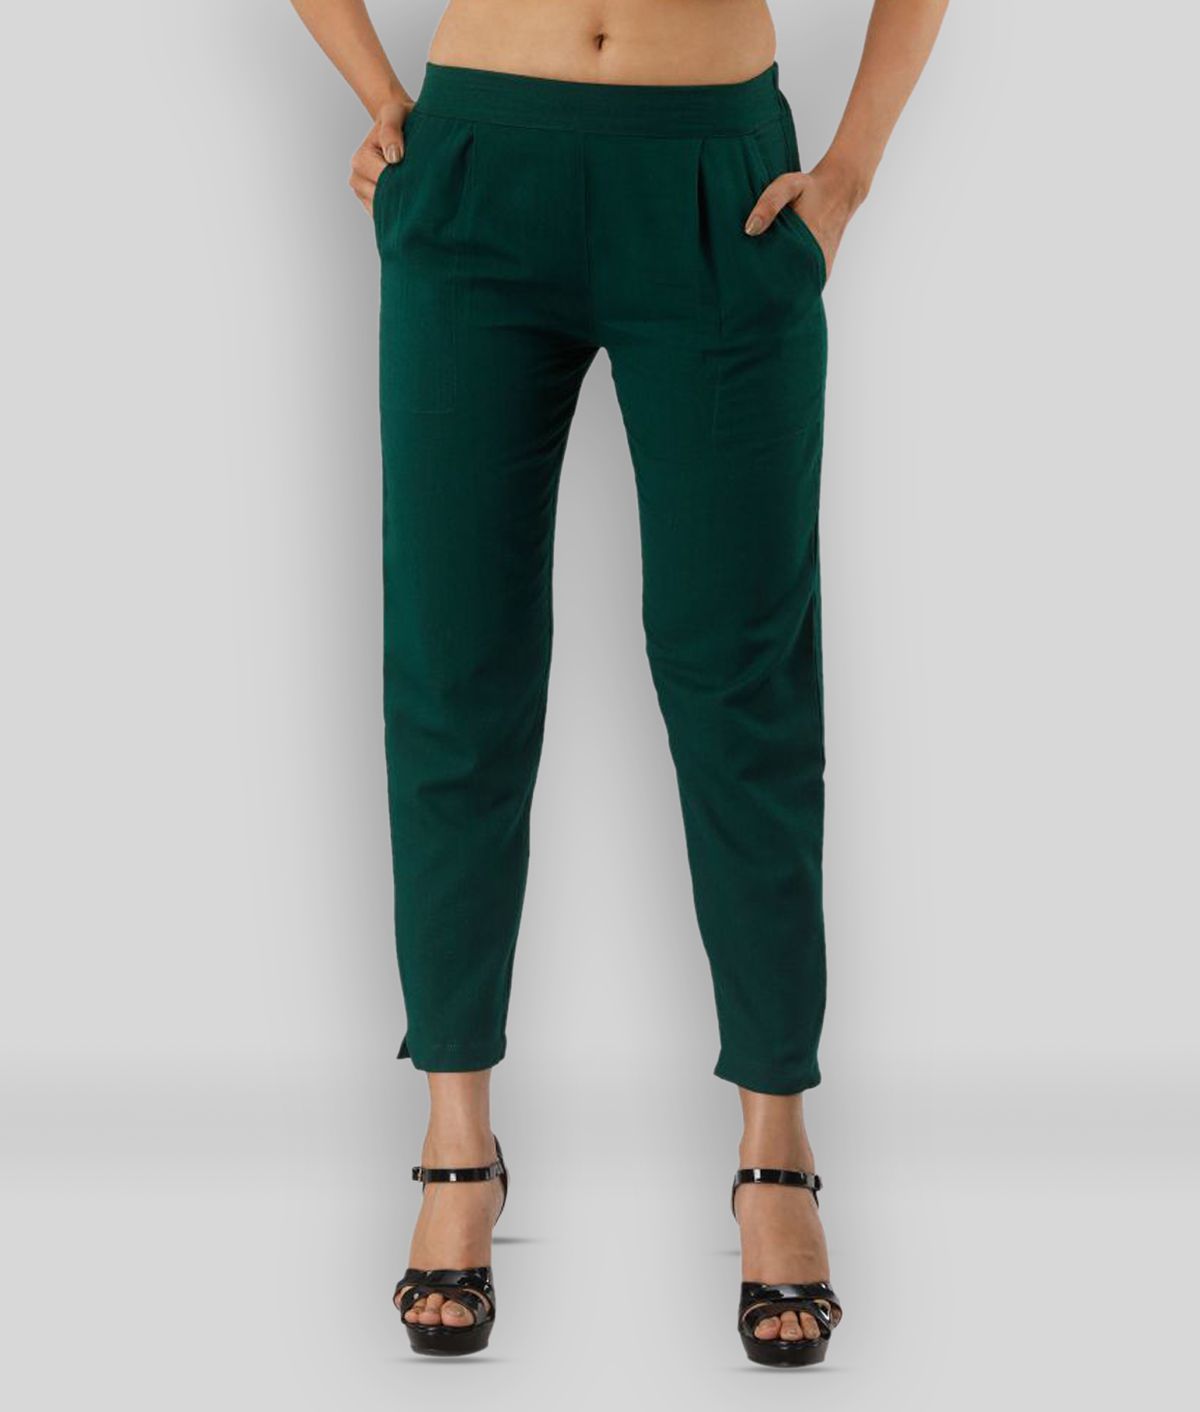 Bawriattire - Green Cotton Regular Fit Women's Casual Pants  ( Pack of 1 )